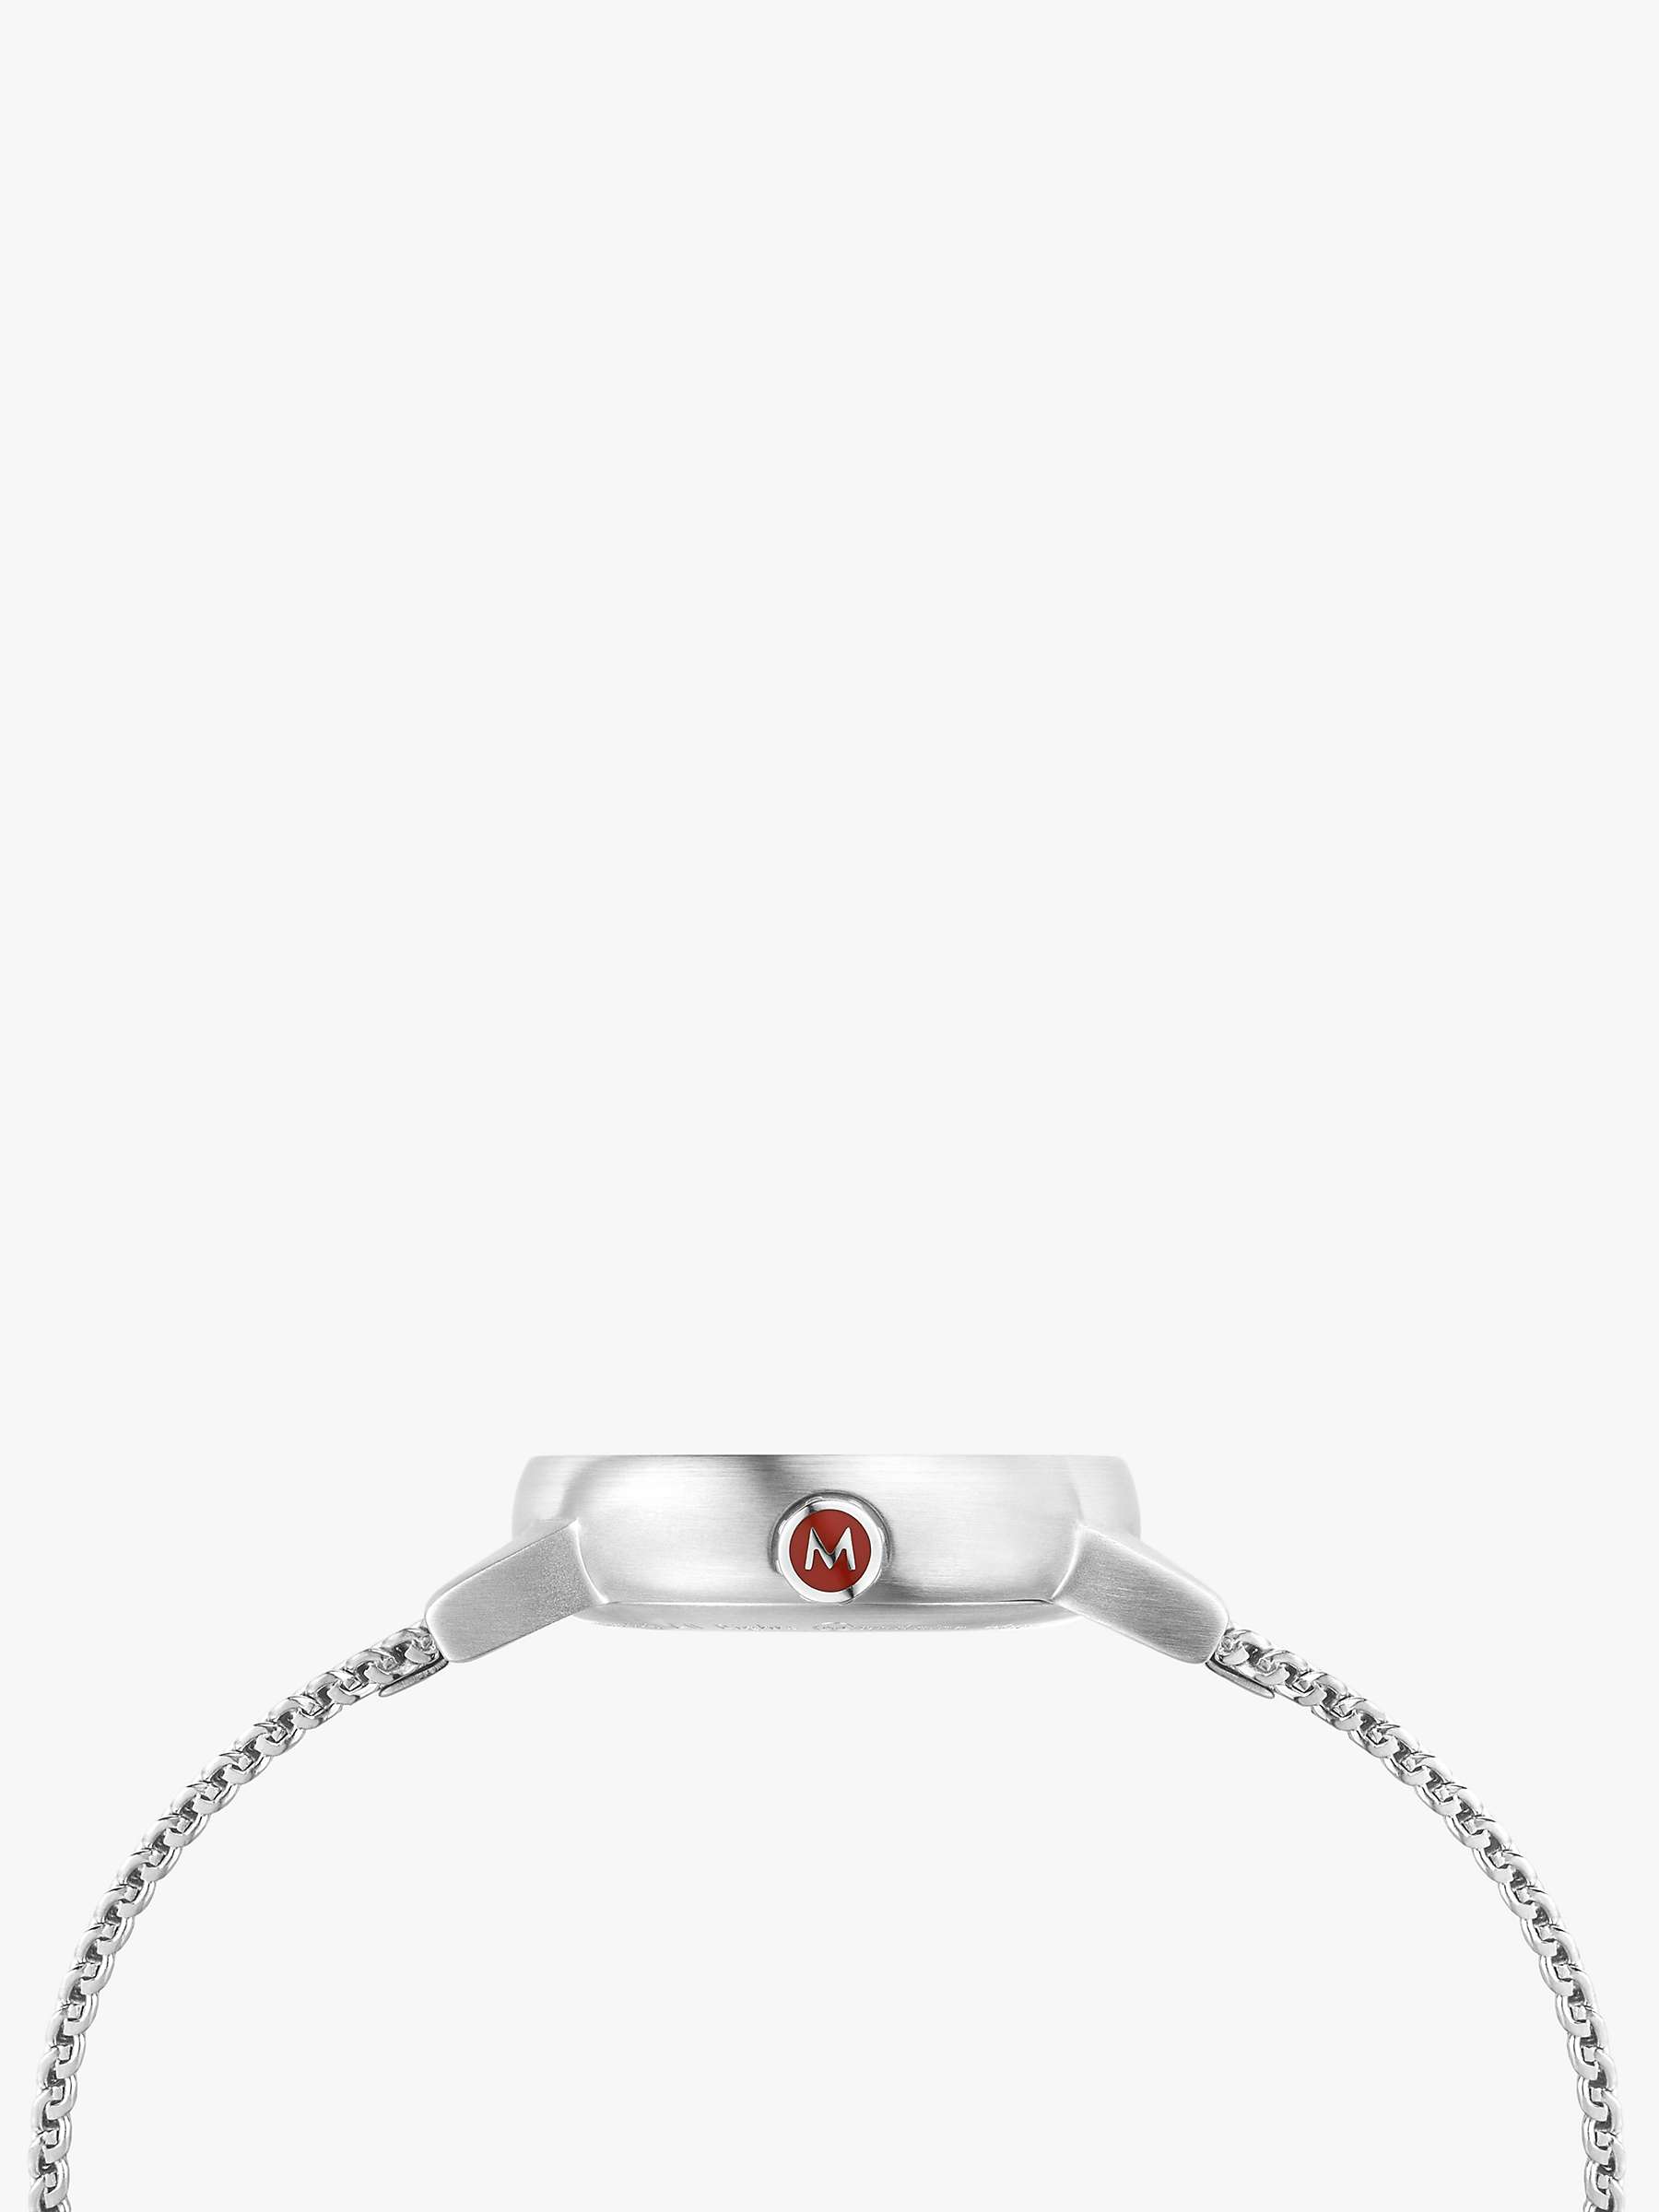 Buy Mondaine Women's MSE.26110.SM Evo 2 Mesh Bracelet Strap Watch, Silver/White Online at johnlewis.com